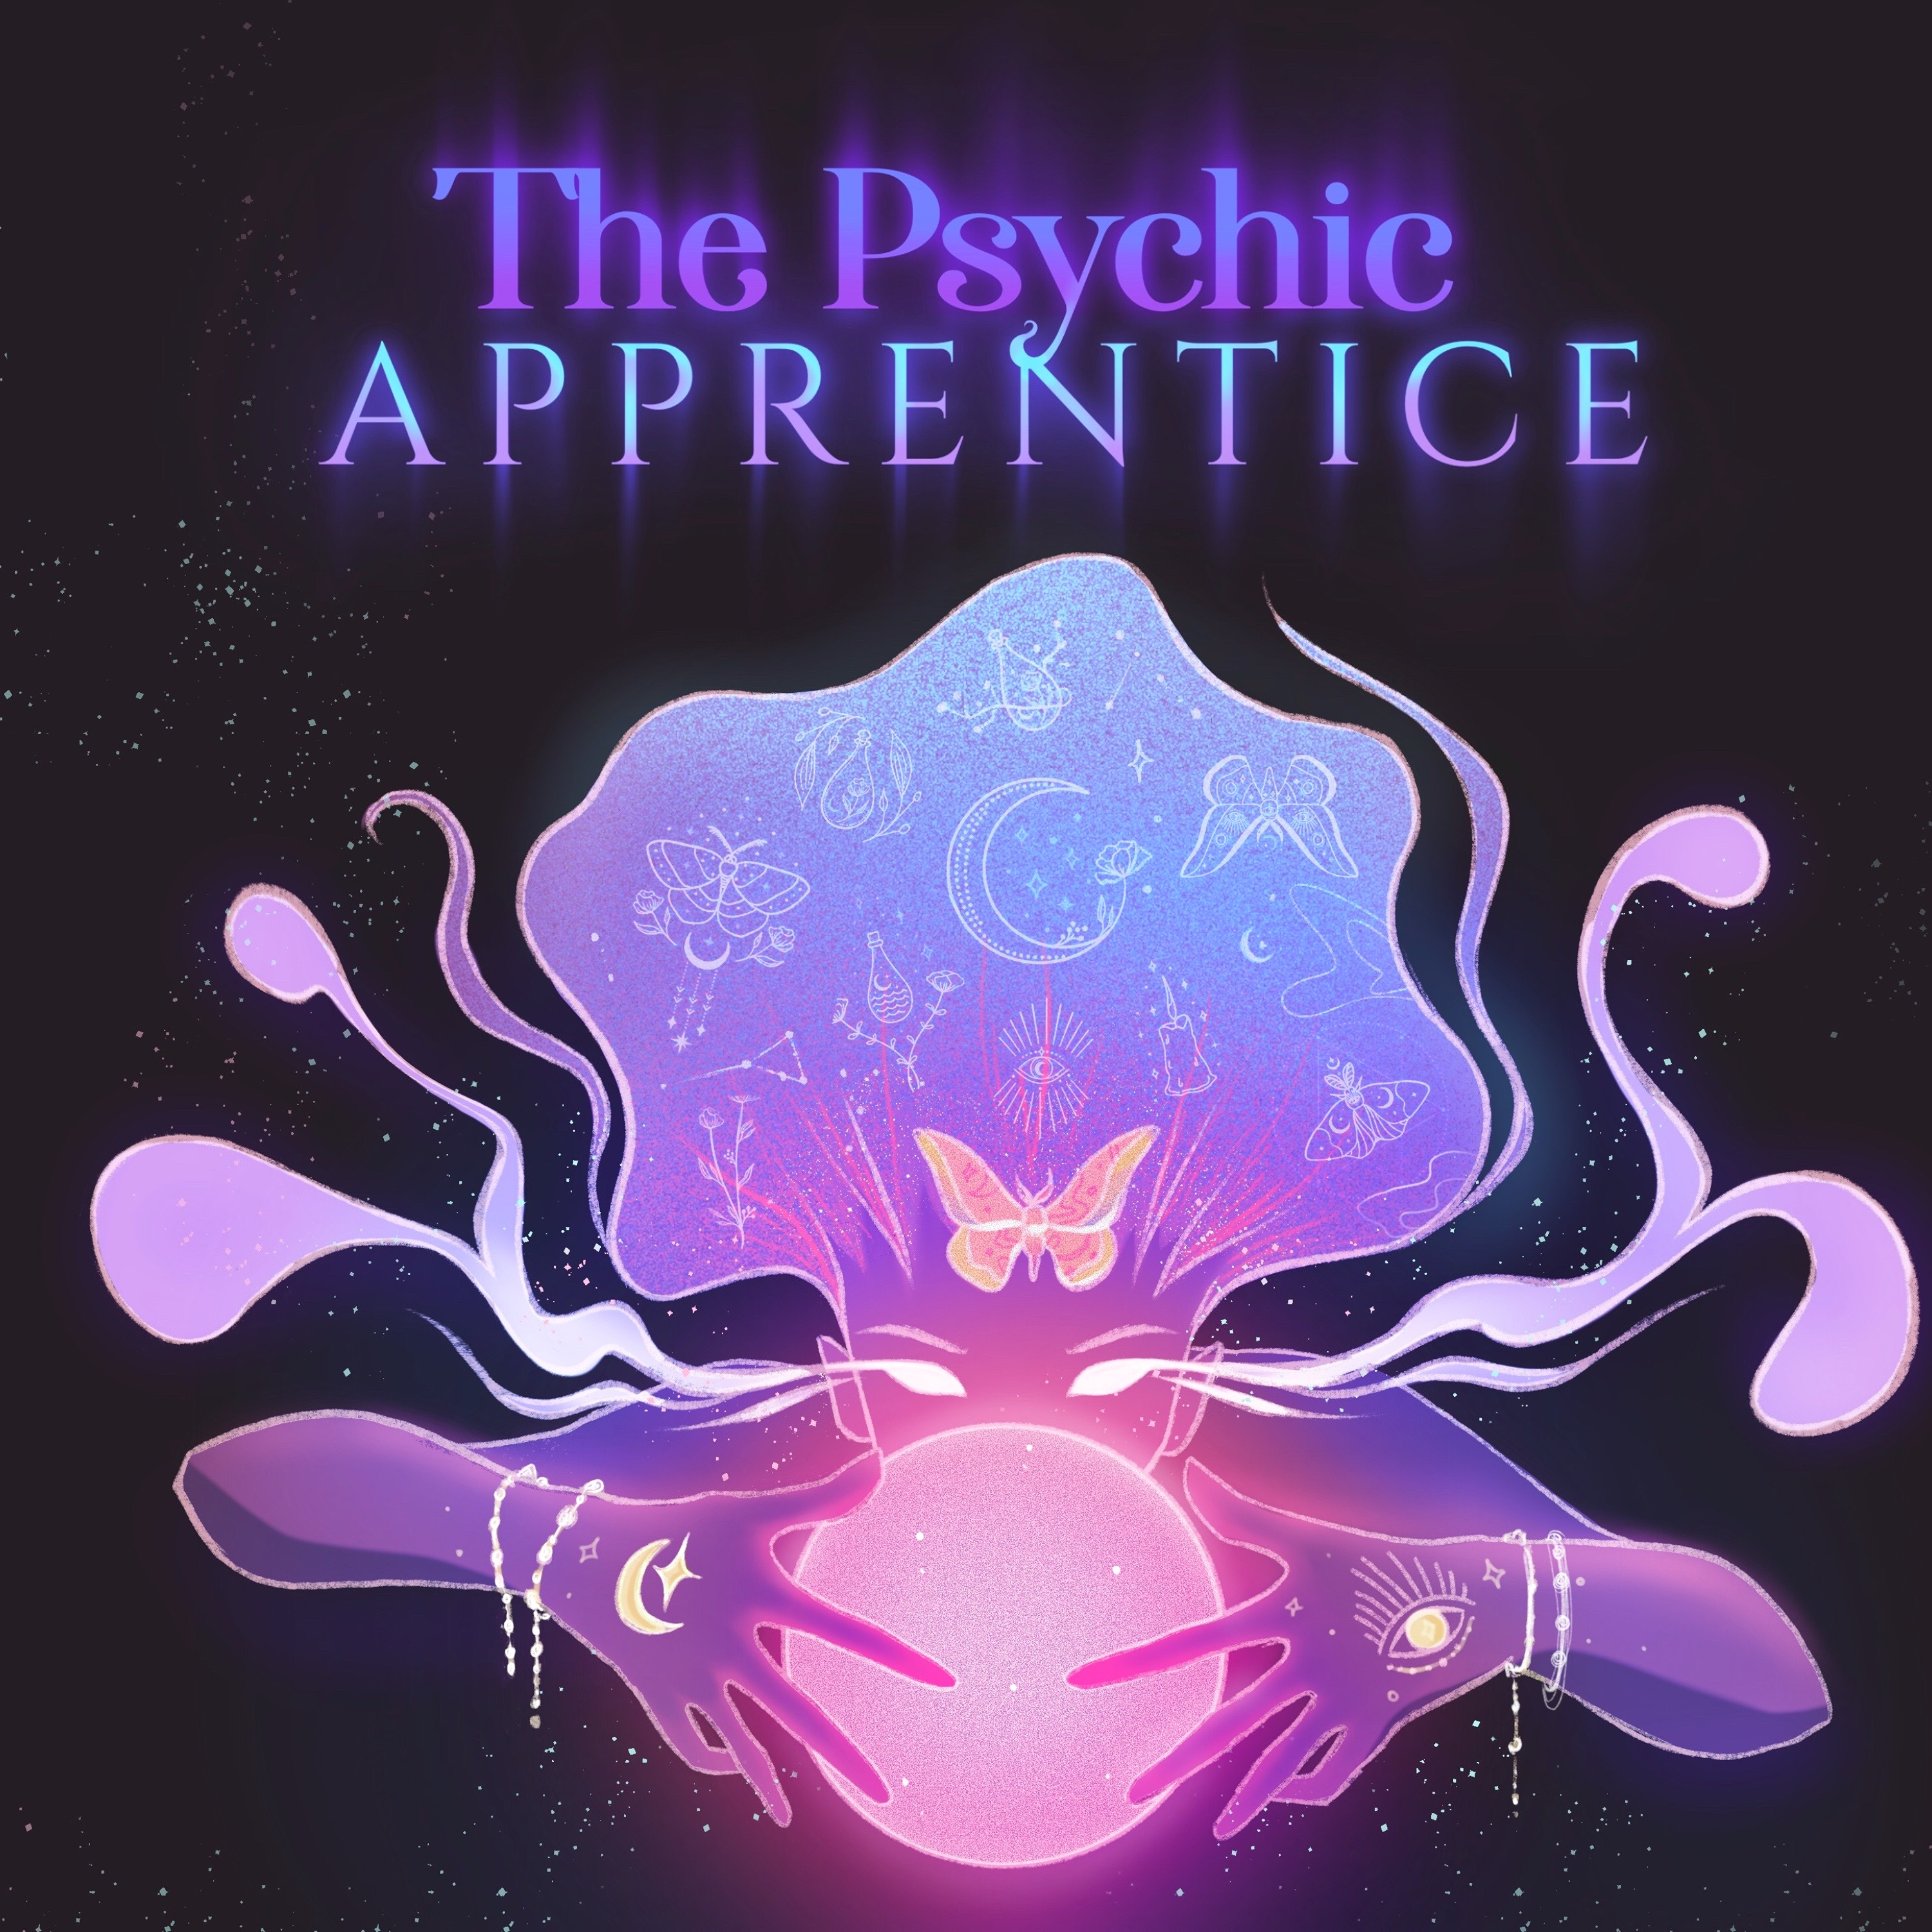 The Psychic Apprentice